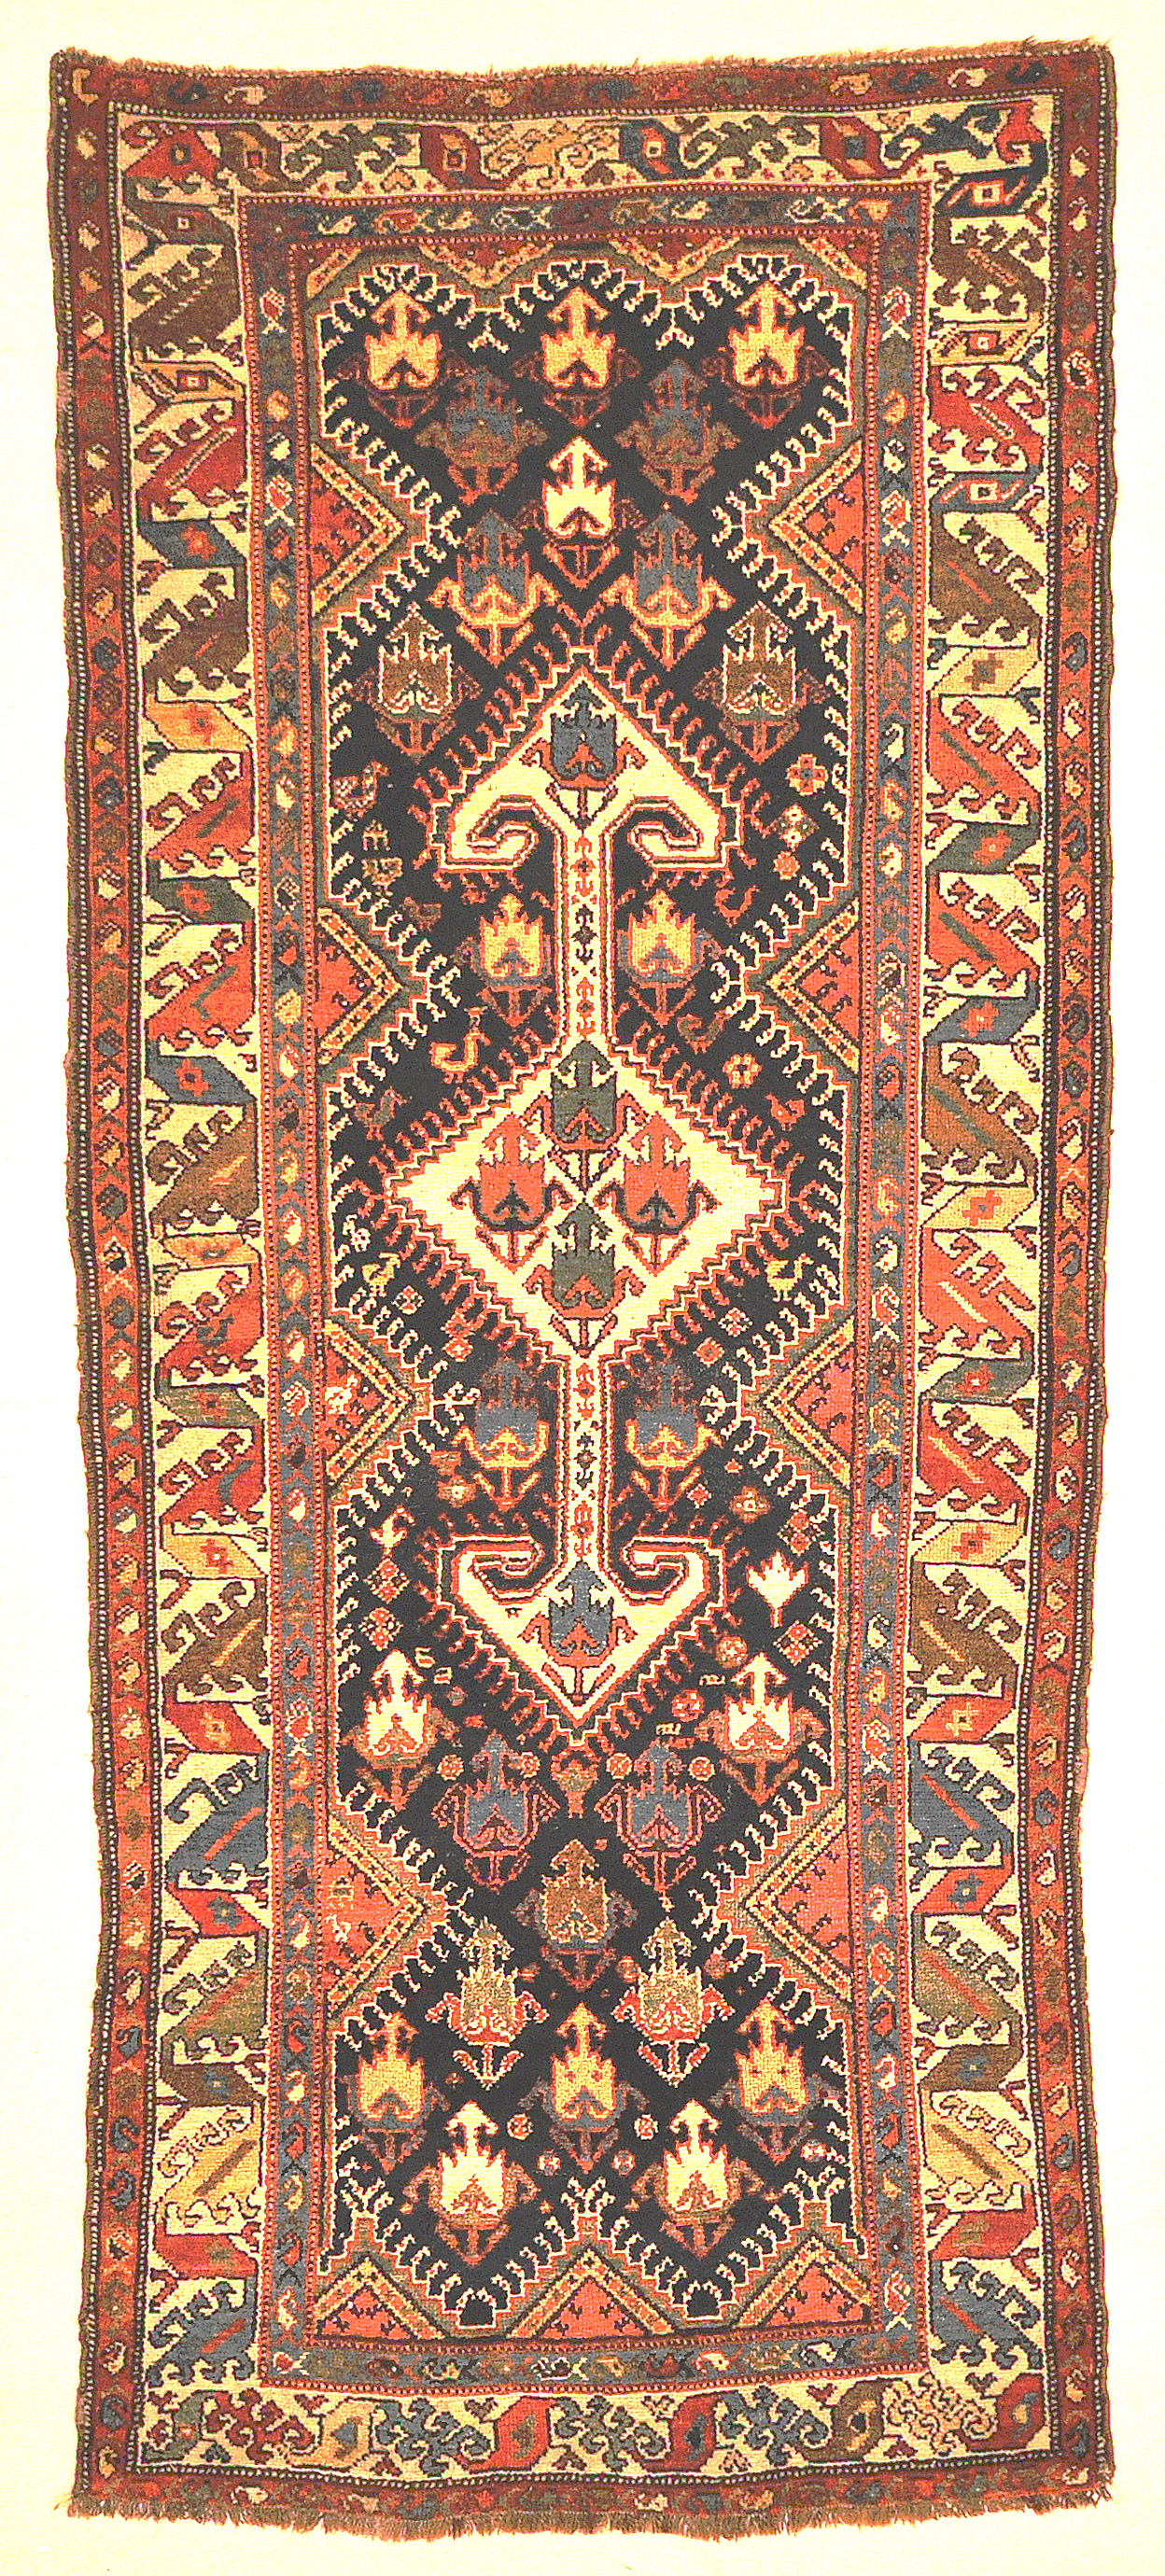 Antique Persian Lori Rug Runner Circa 1870 Genuine Authentic Intricate Woven Carpet Art Santa Barbara Design Center Rugs and More